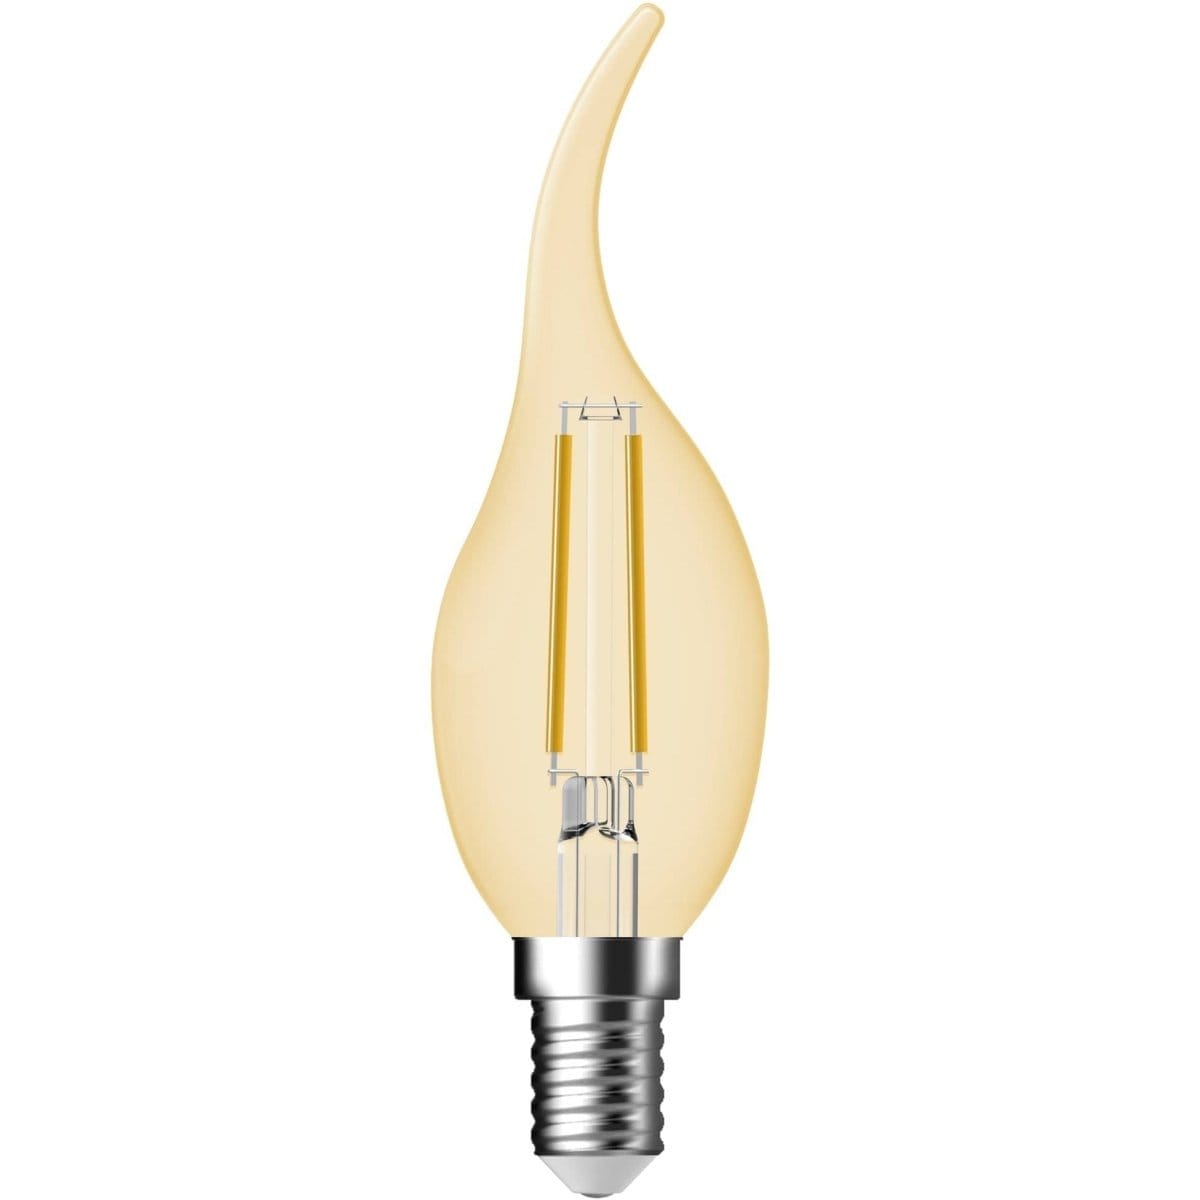 Heavenly Chandeliers Light Bulbs E27 A60 Decorative Dimmable Light Bulb, warm golden glow